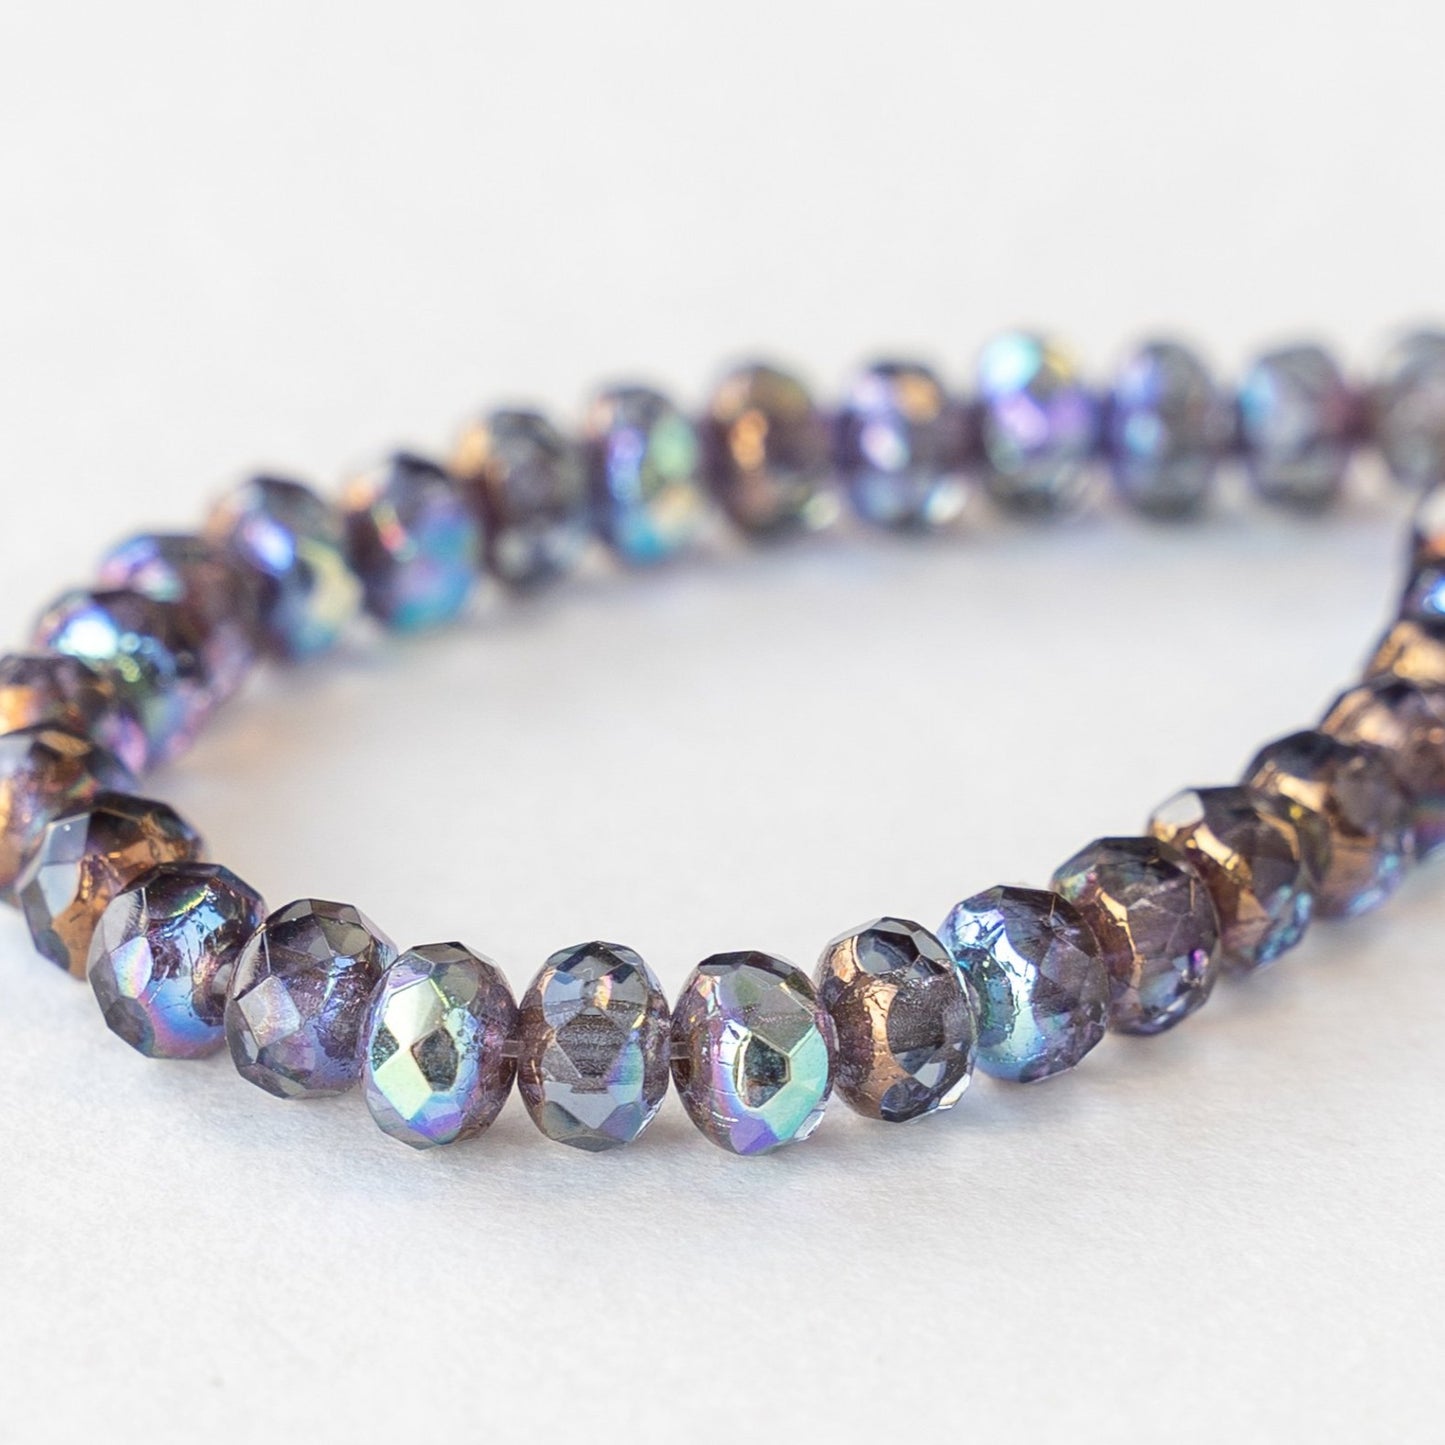 3x5mm Rondelle Beads - Lavender Bronze AB - 30 beads